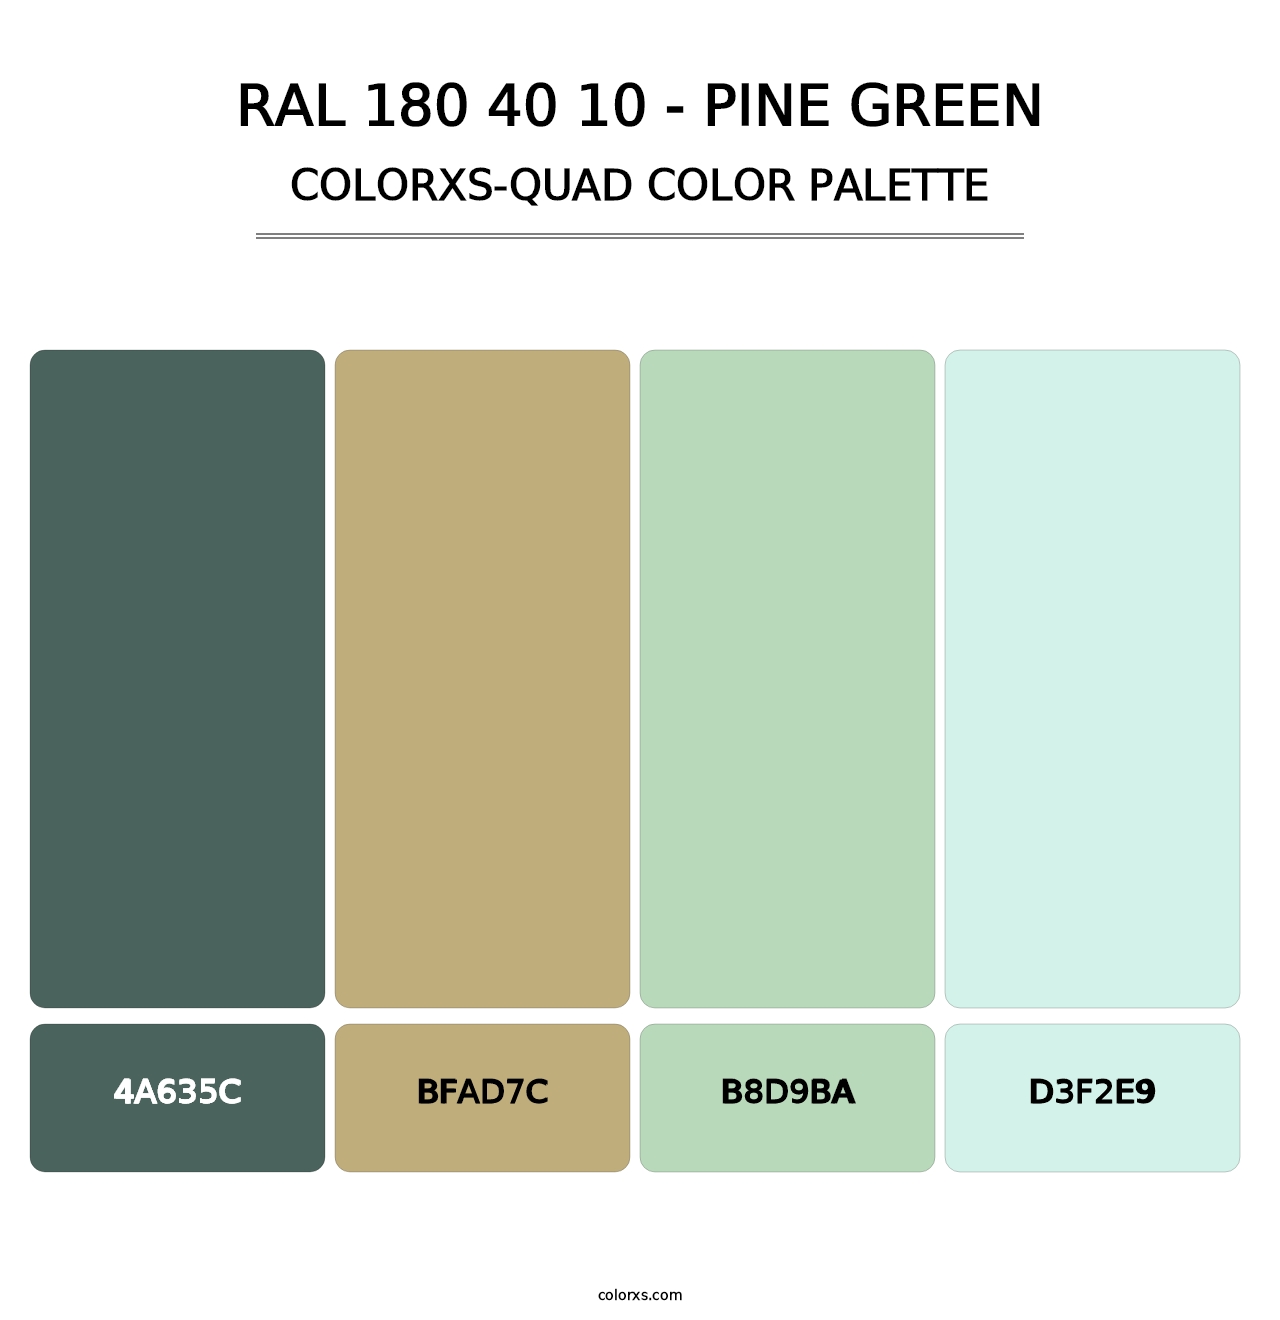 RAL 180 40 10 - Pine Green - Colorxs Quad Palette